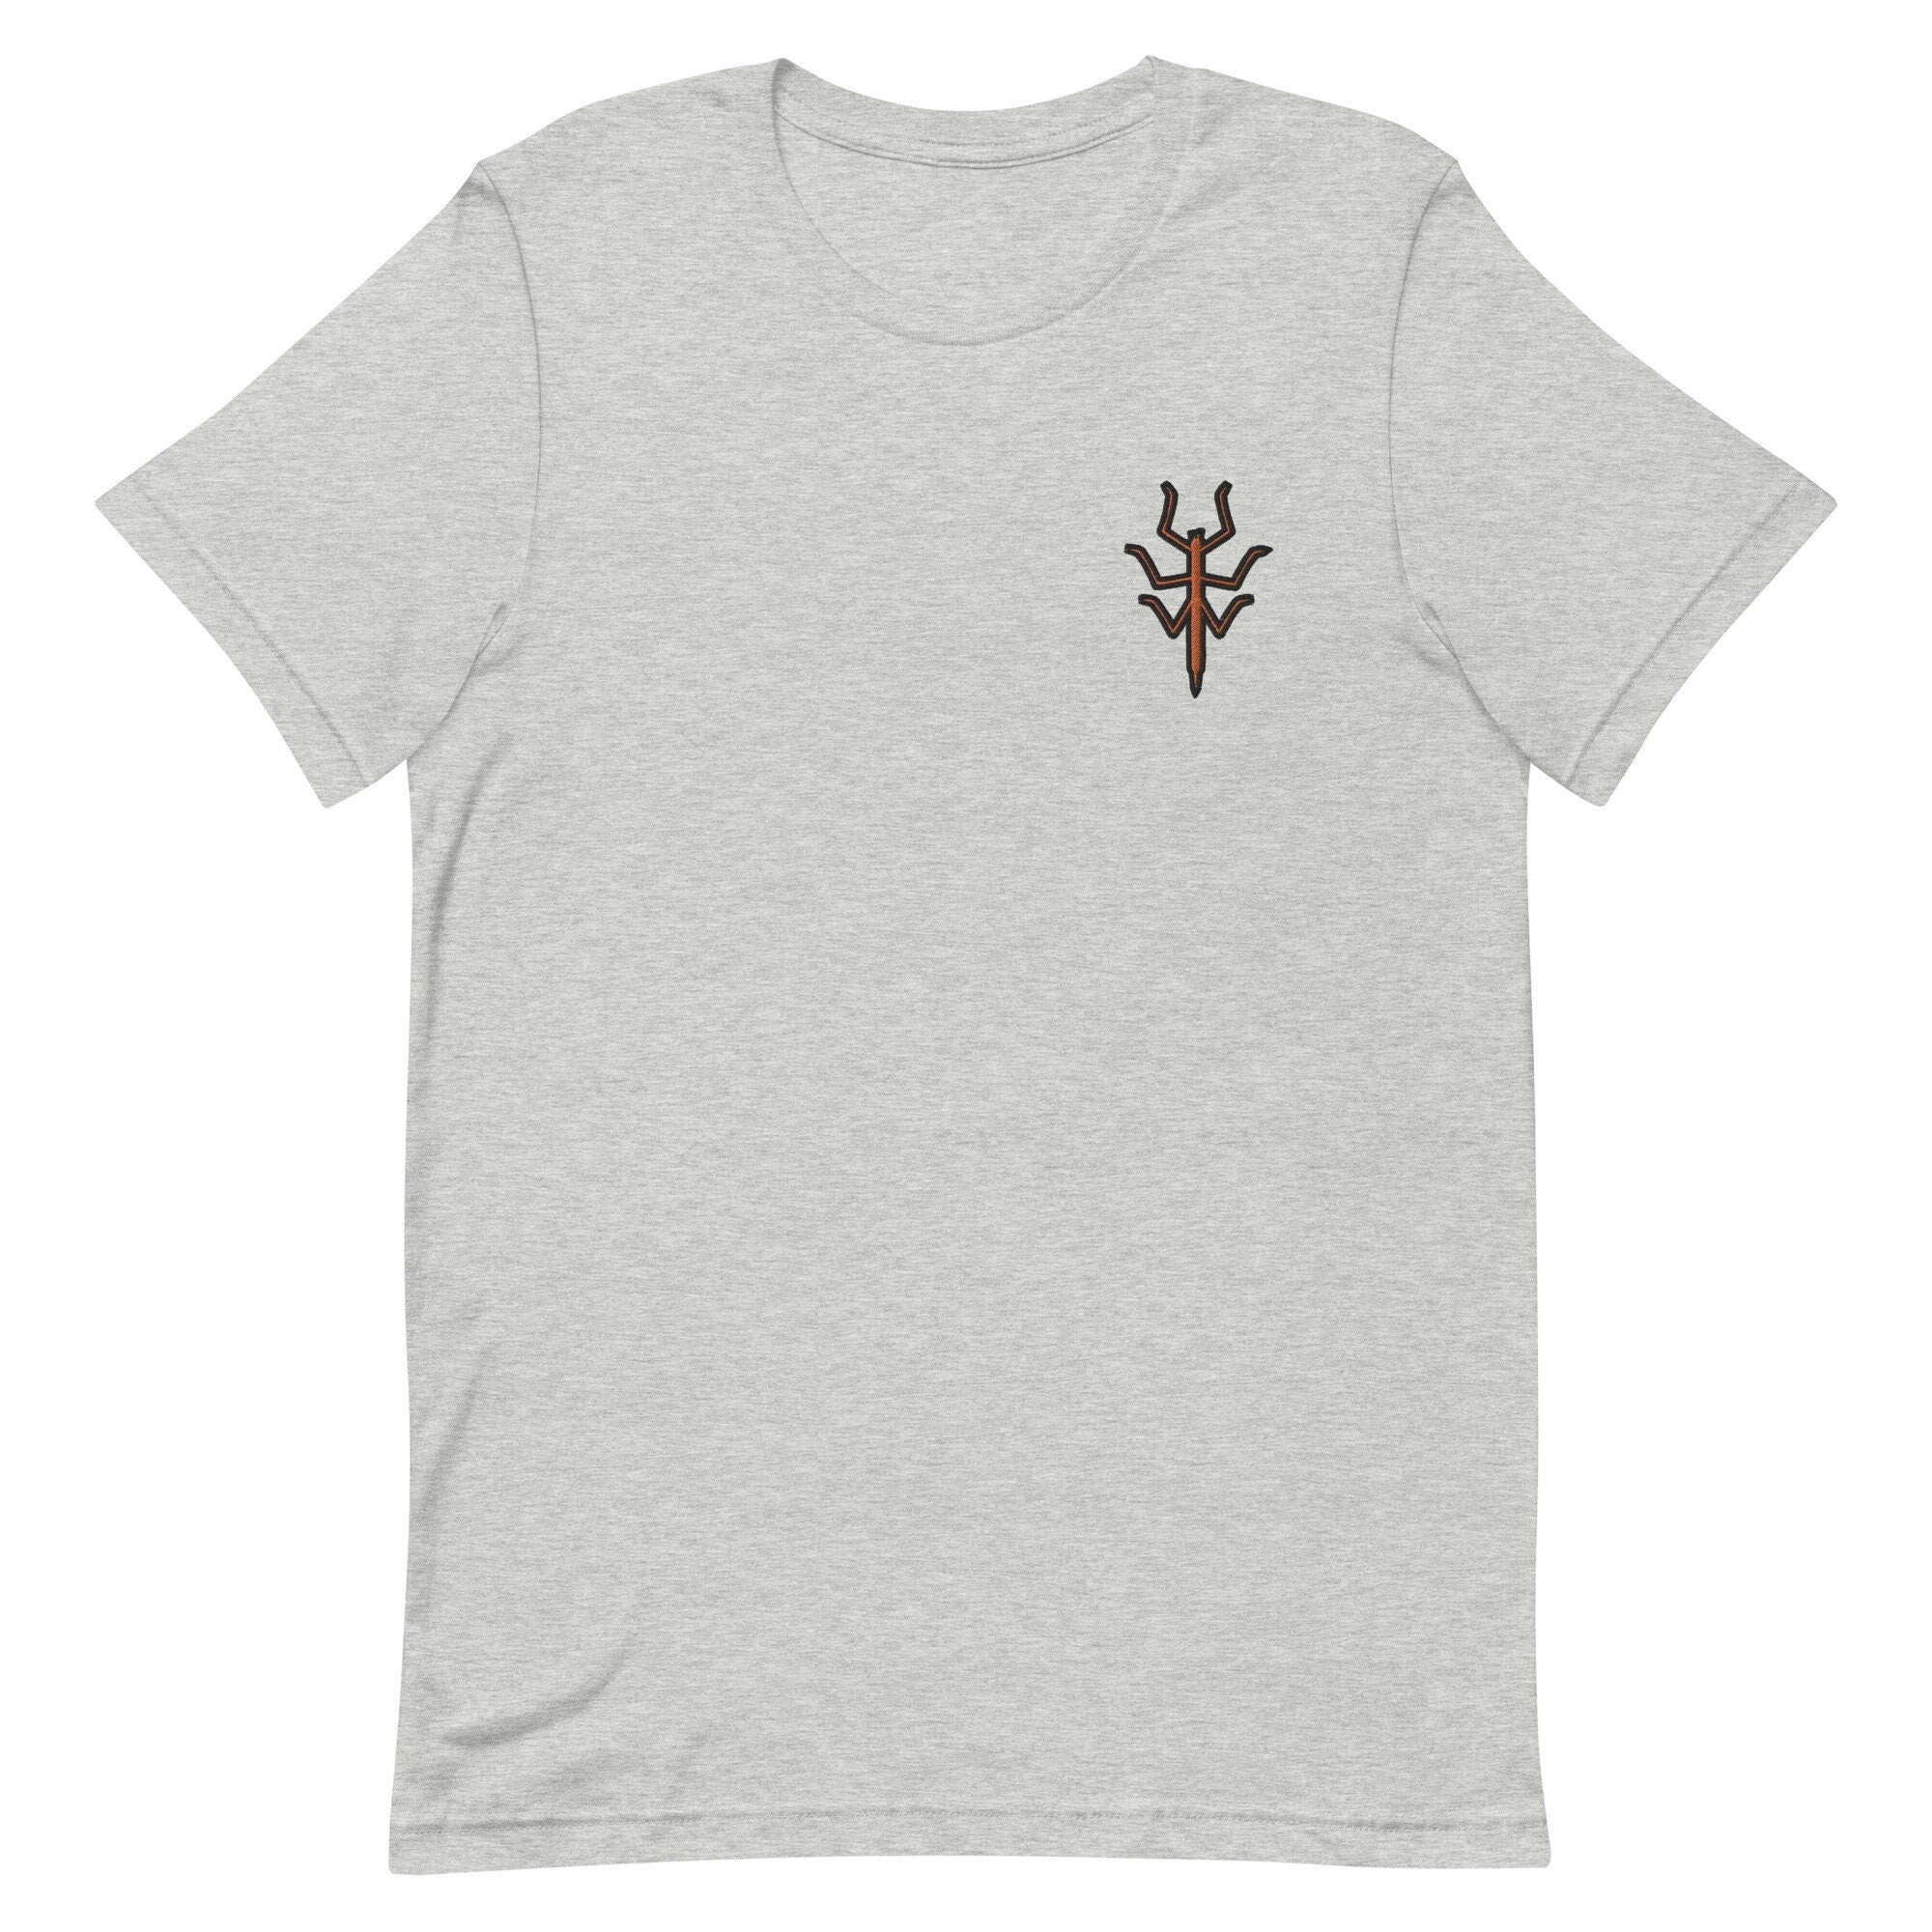 Stick Bug Premium Men's T-Shirt, Embroidered Men's T-Shirt Gift for Boyfriend, Men's Short Sleeve Shirt - Multiple Colors